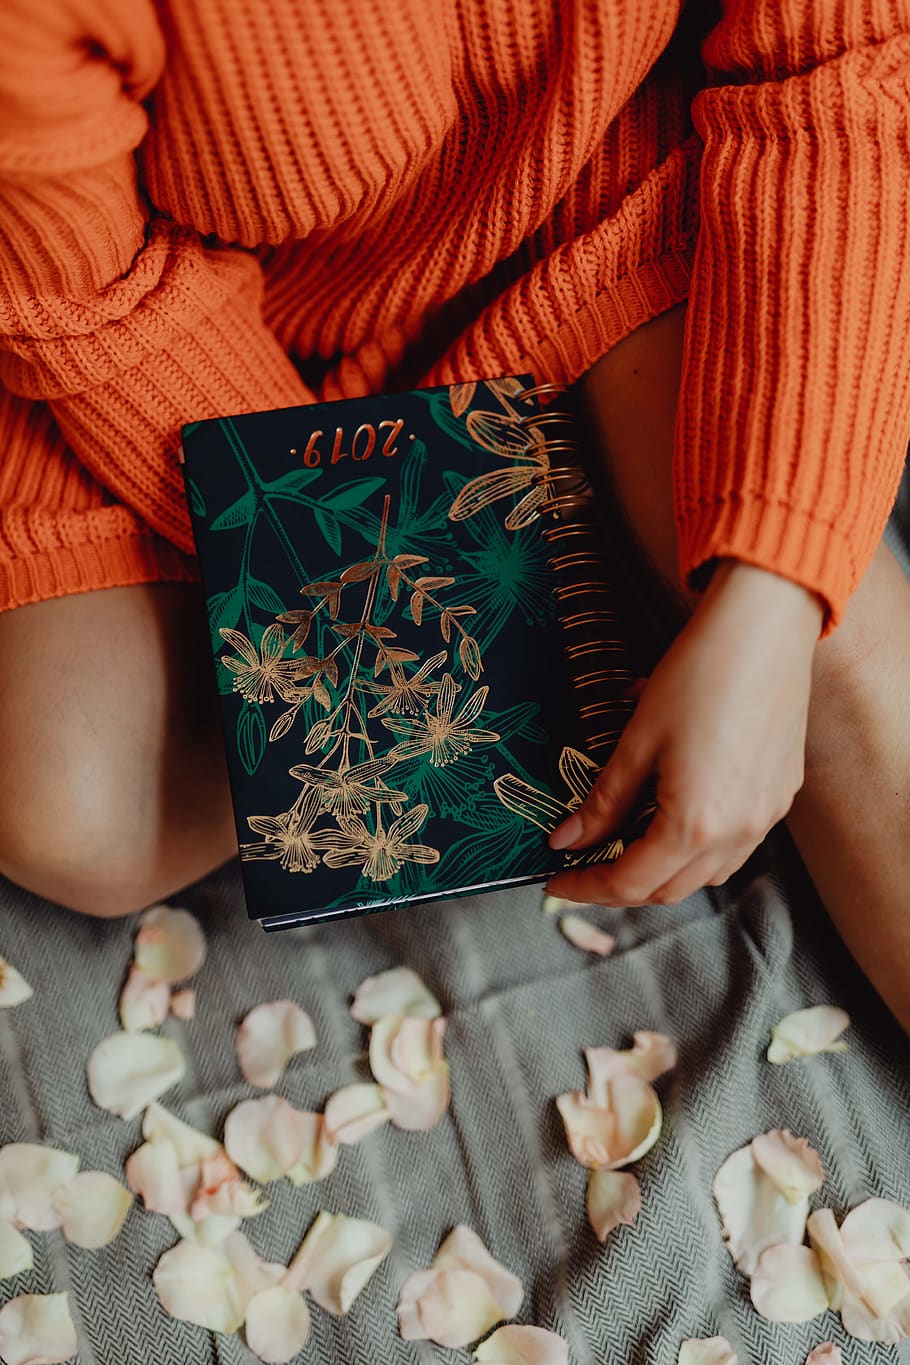 calendar, notebook, woman, 2019, orange, organizer, sweater, holds, hands, real people